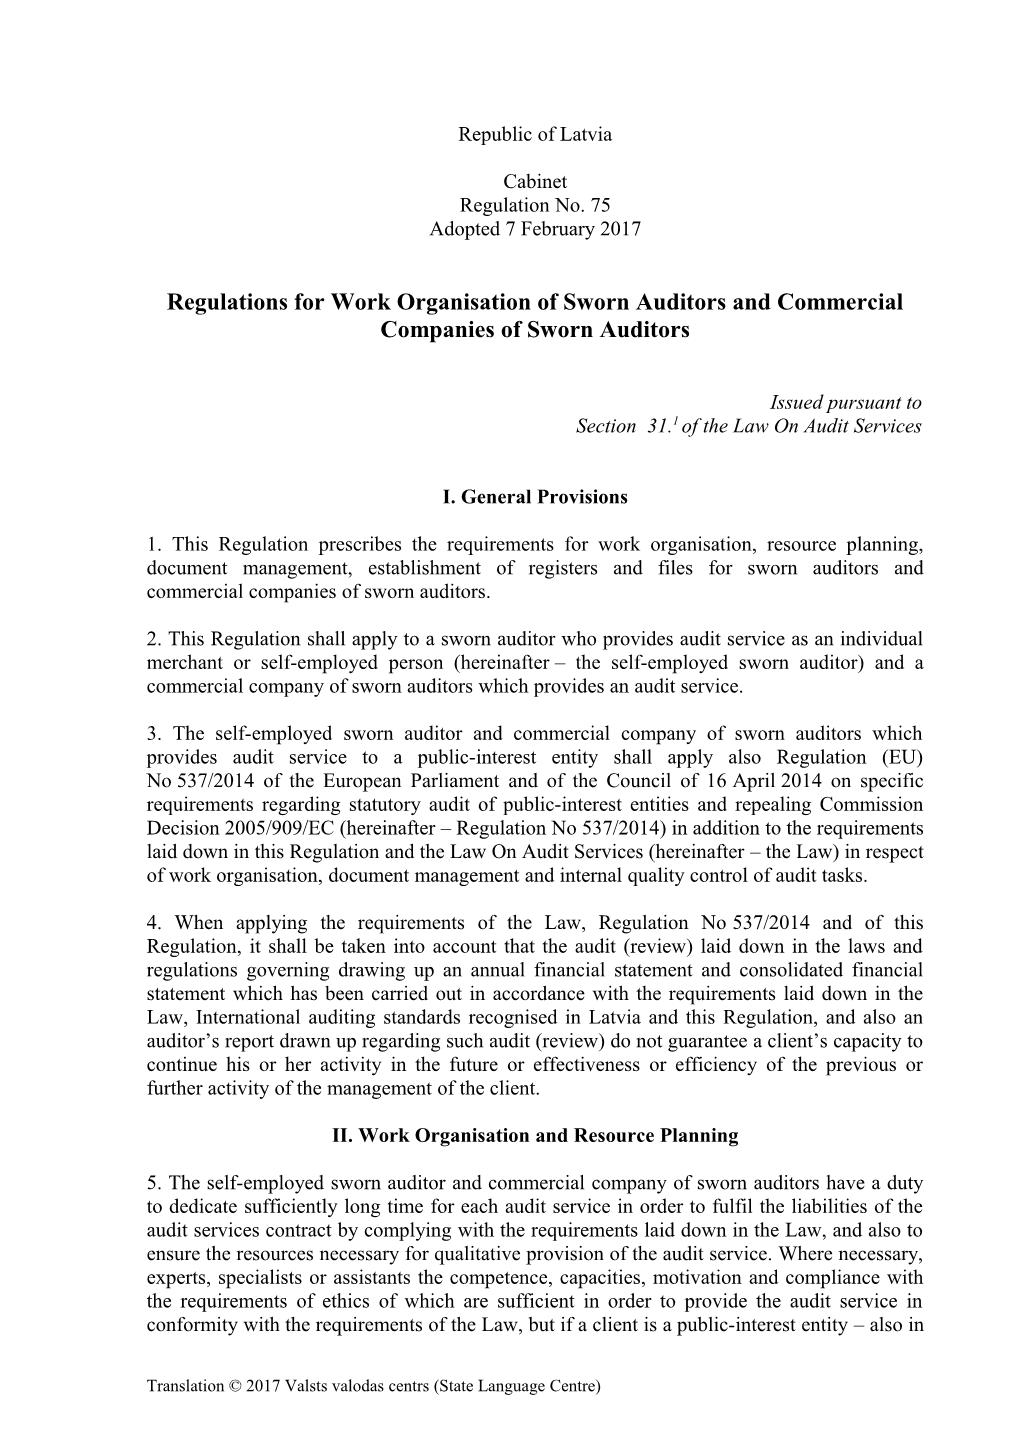 Regulations for Work Organisation of Sworn Auditors and Commercial Companies of Sworn Auditors